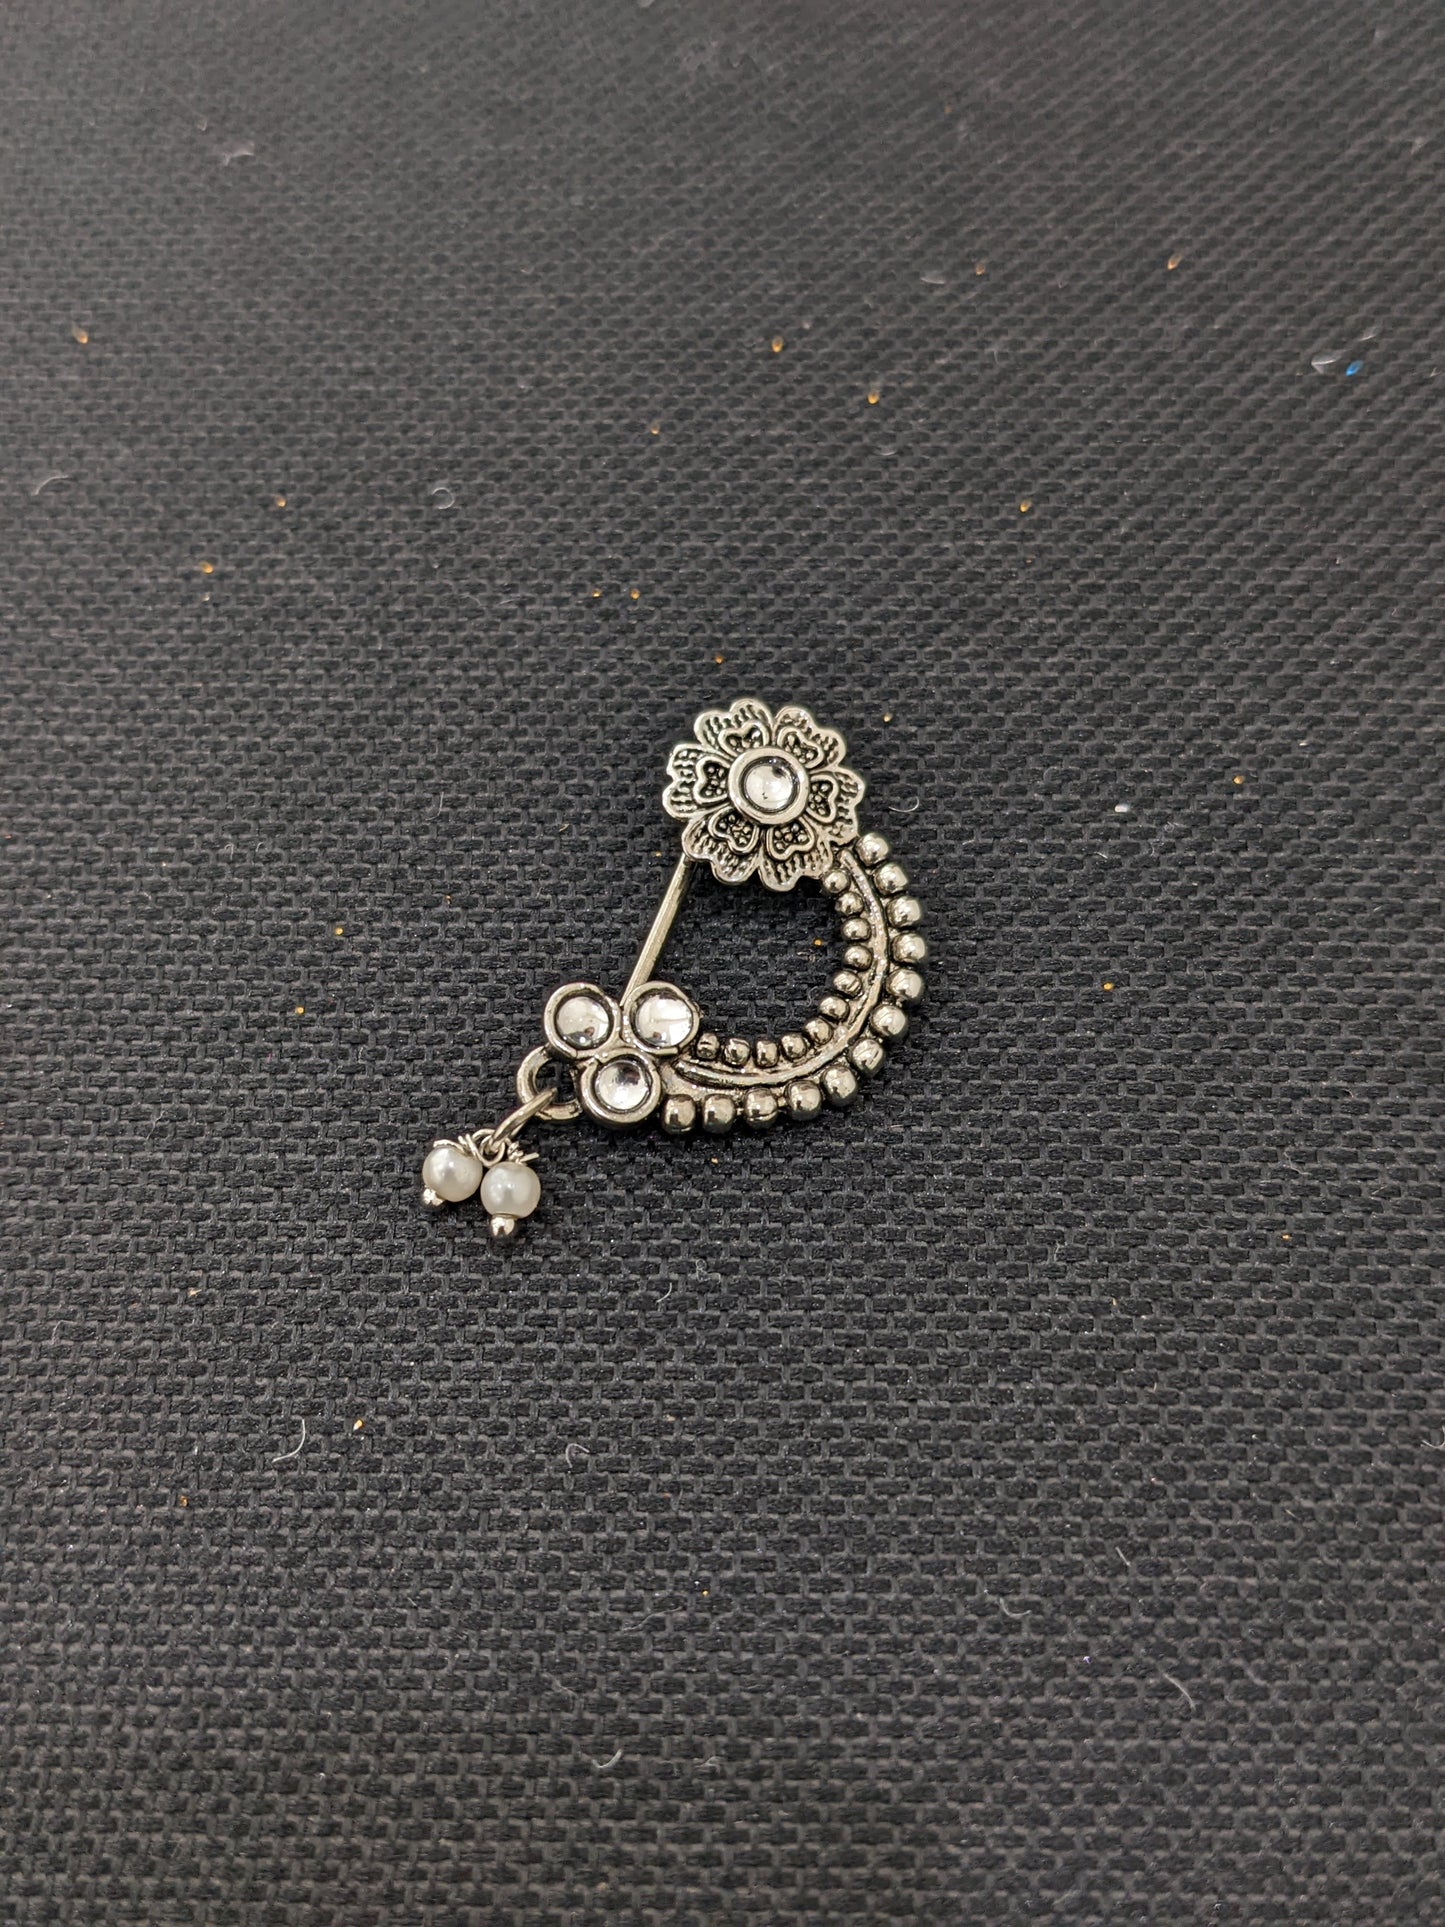 Oxidized silver Medium size clip on Nose Pin